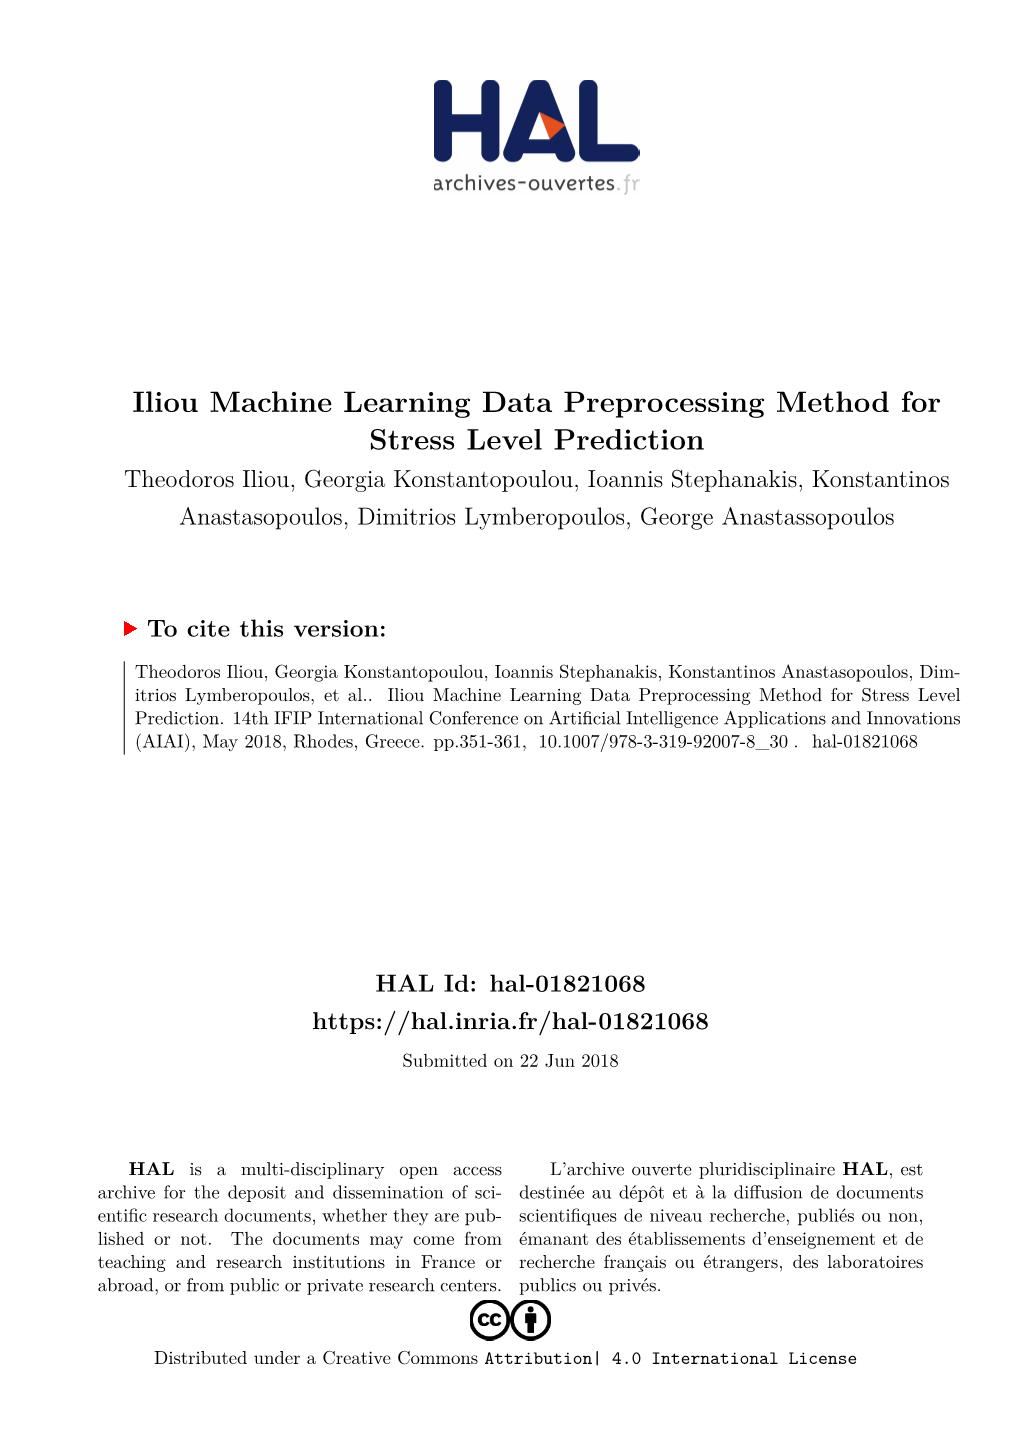 Iliou Machine Learning Data Preprocessing Method for Stress Level Prediction